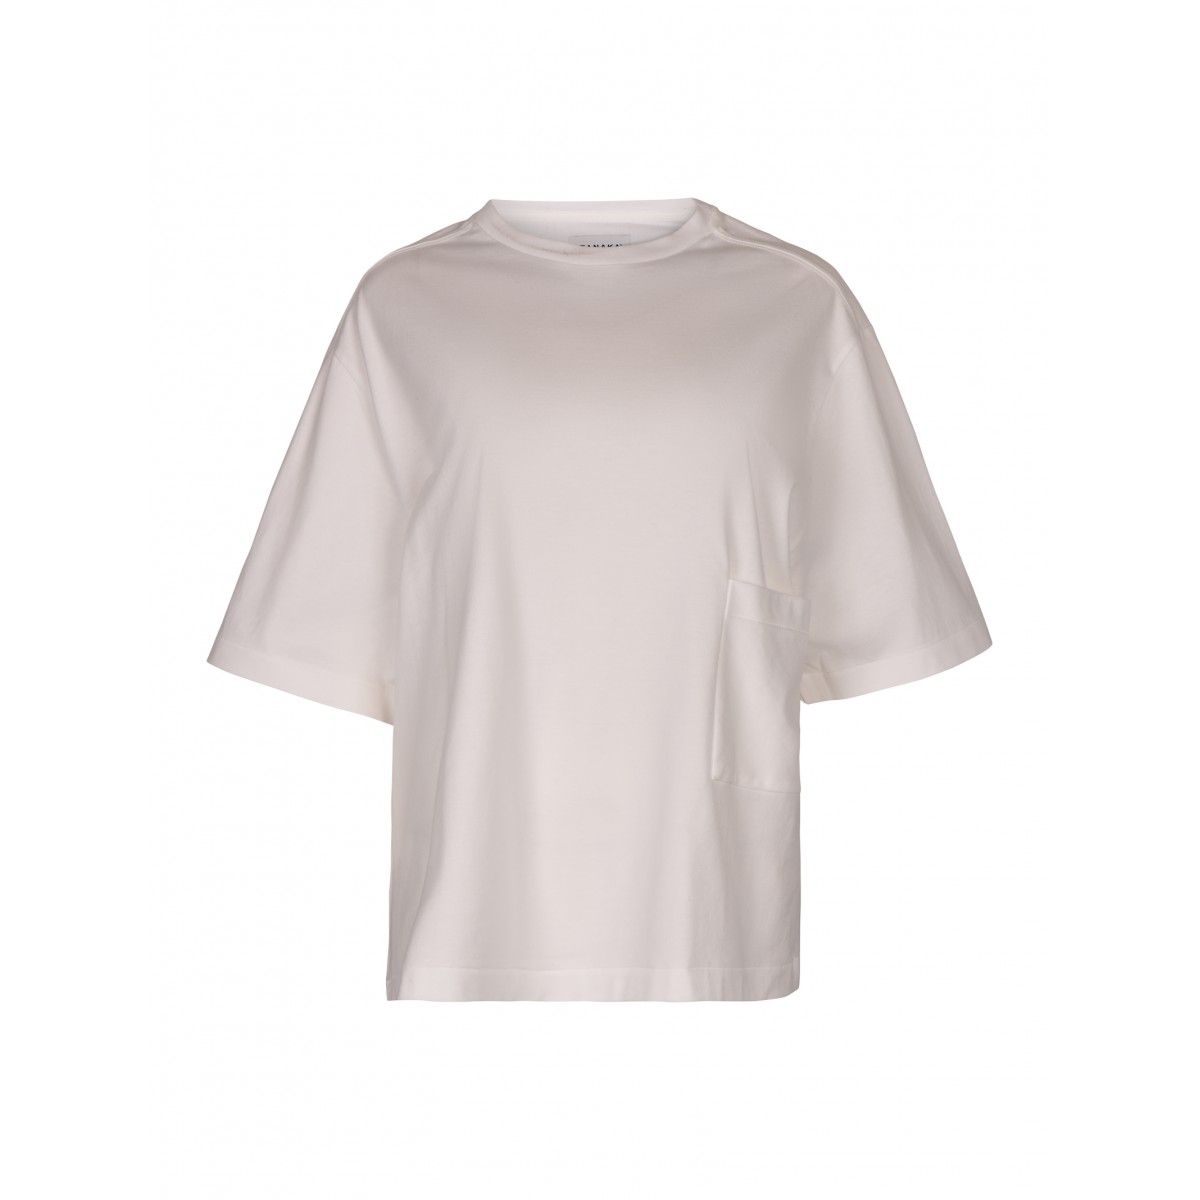 White cotton Basic T-Shirt